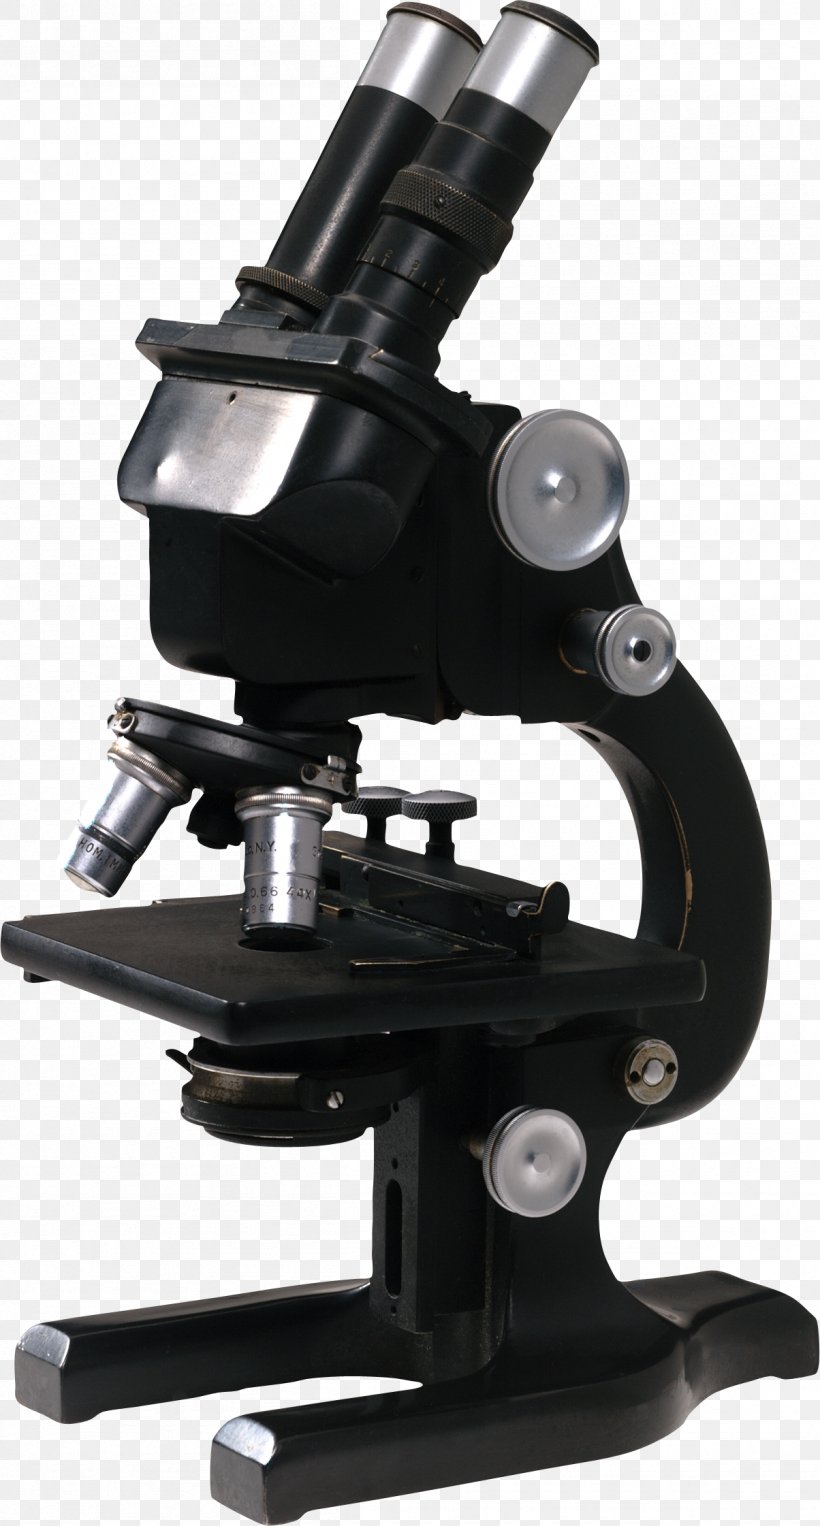 Microscope Binoculars Optics Echipament De Laborator, PNG, 1204x2242px, Microscope, Binoculars, Echipament De Laborator, Laboratory, Opera Glasses Download Free